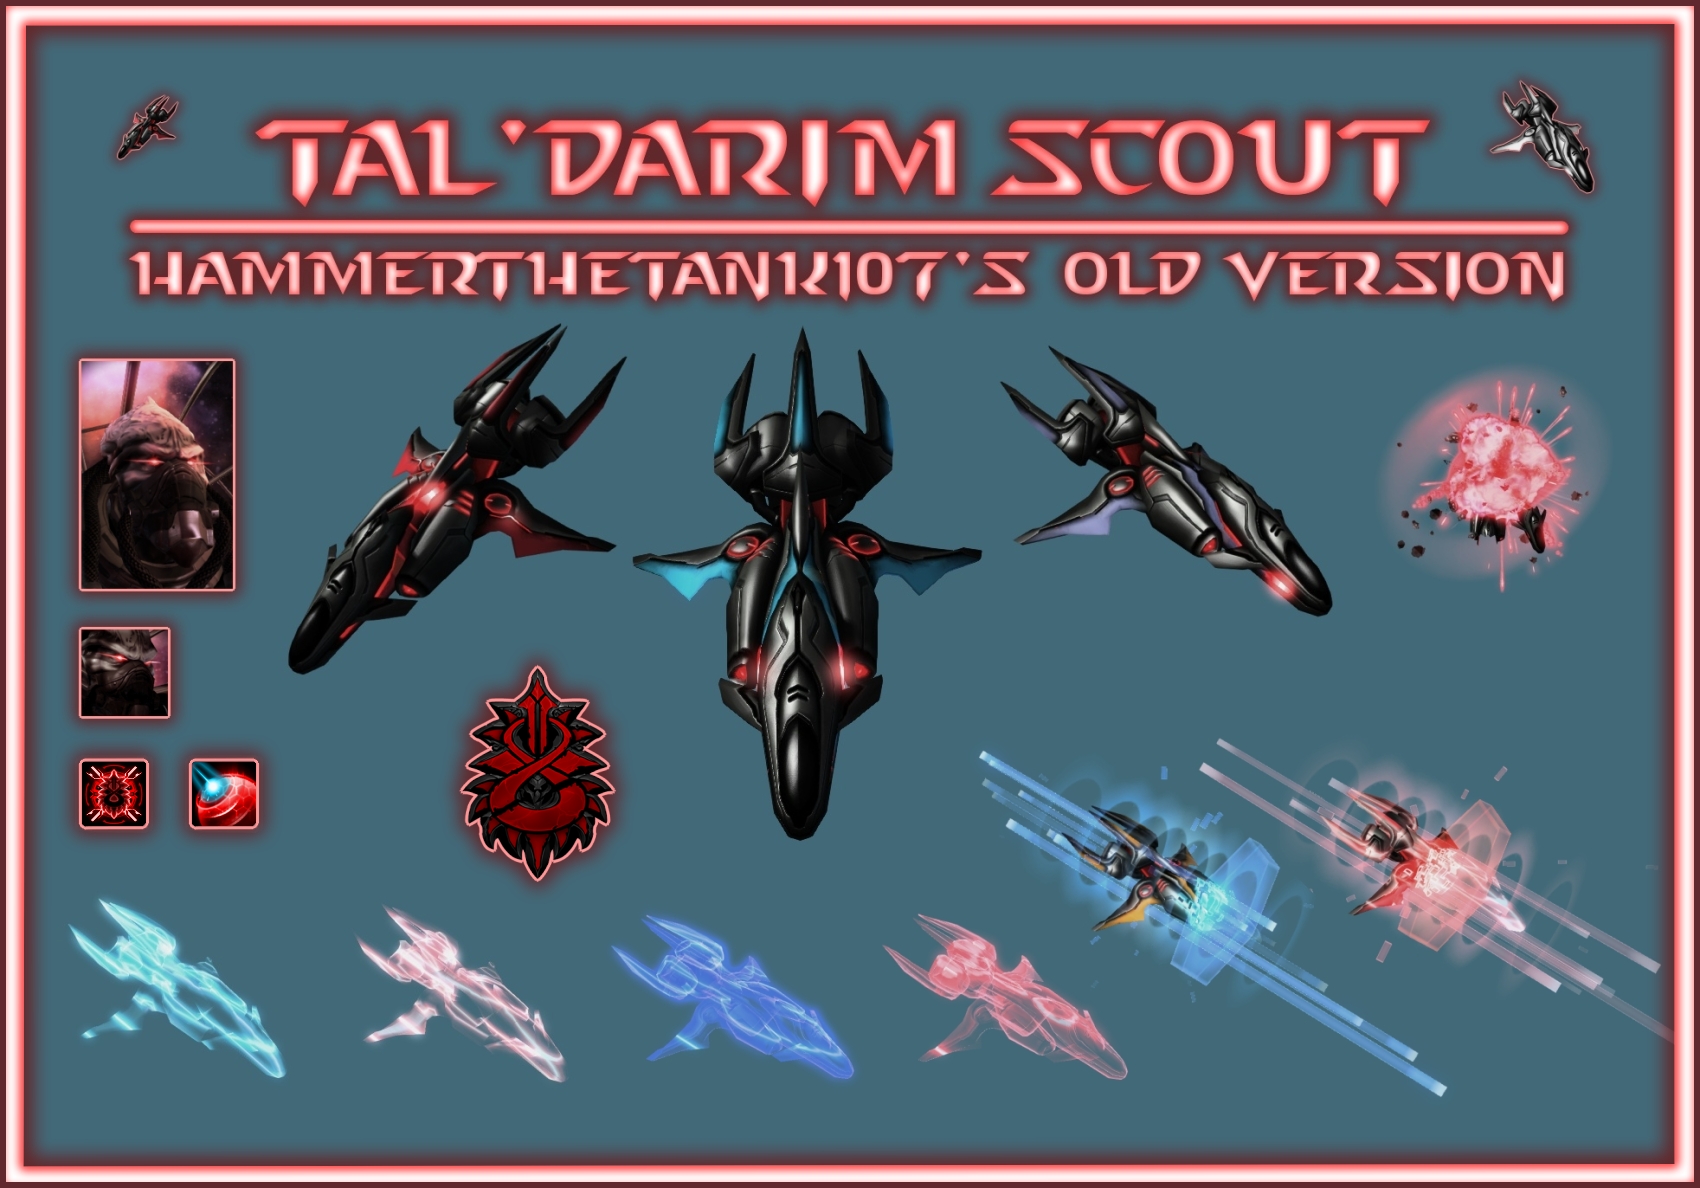 Tal'darim Scout - Hammer's Old Version